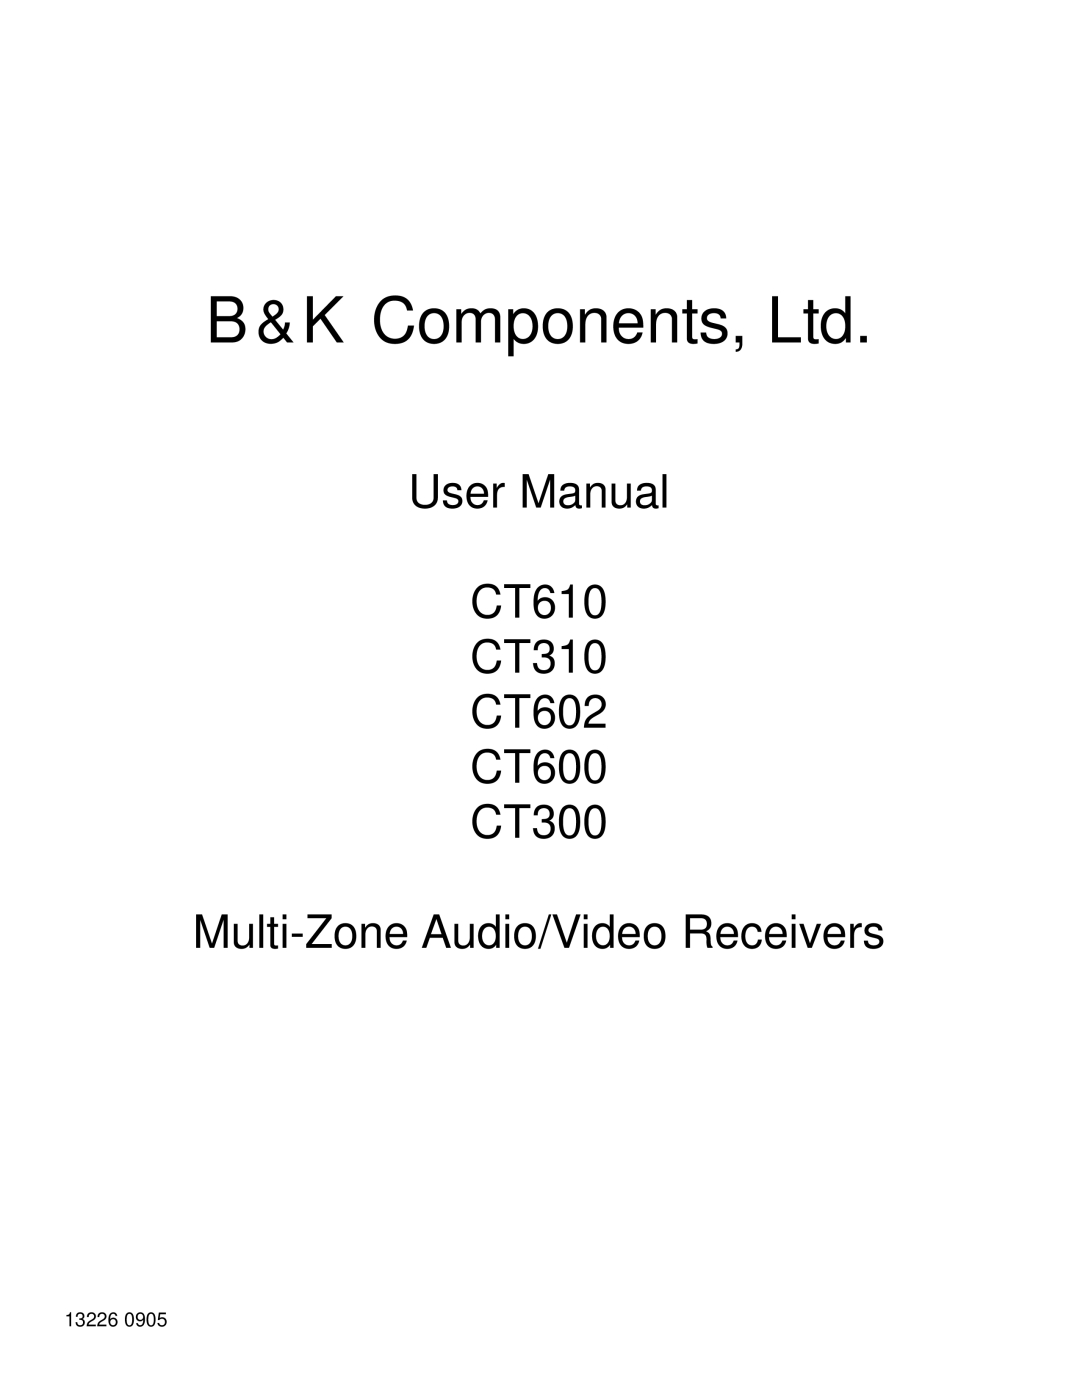 B&K user manual B & K Components, Ltd, User Manual CT610 CT310 CT602 CT600 CT300, Multi-ZoneAudio/Video Receivers 